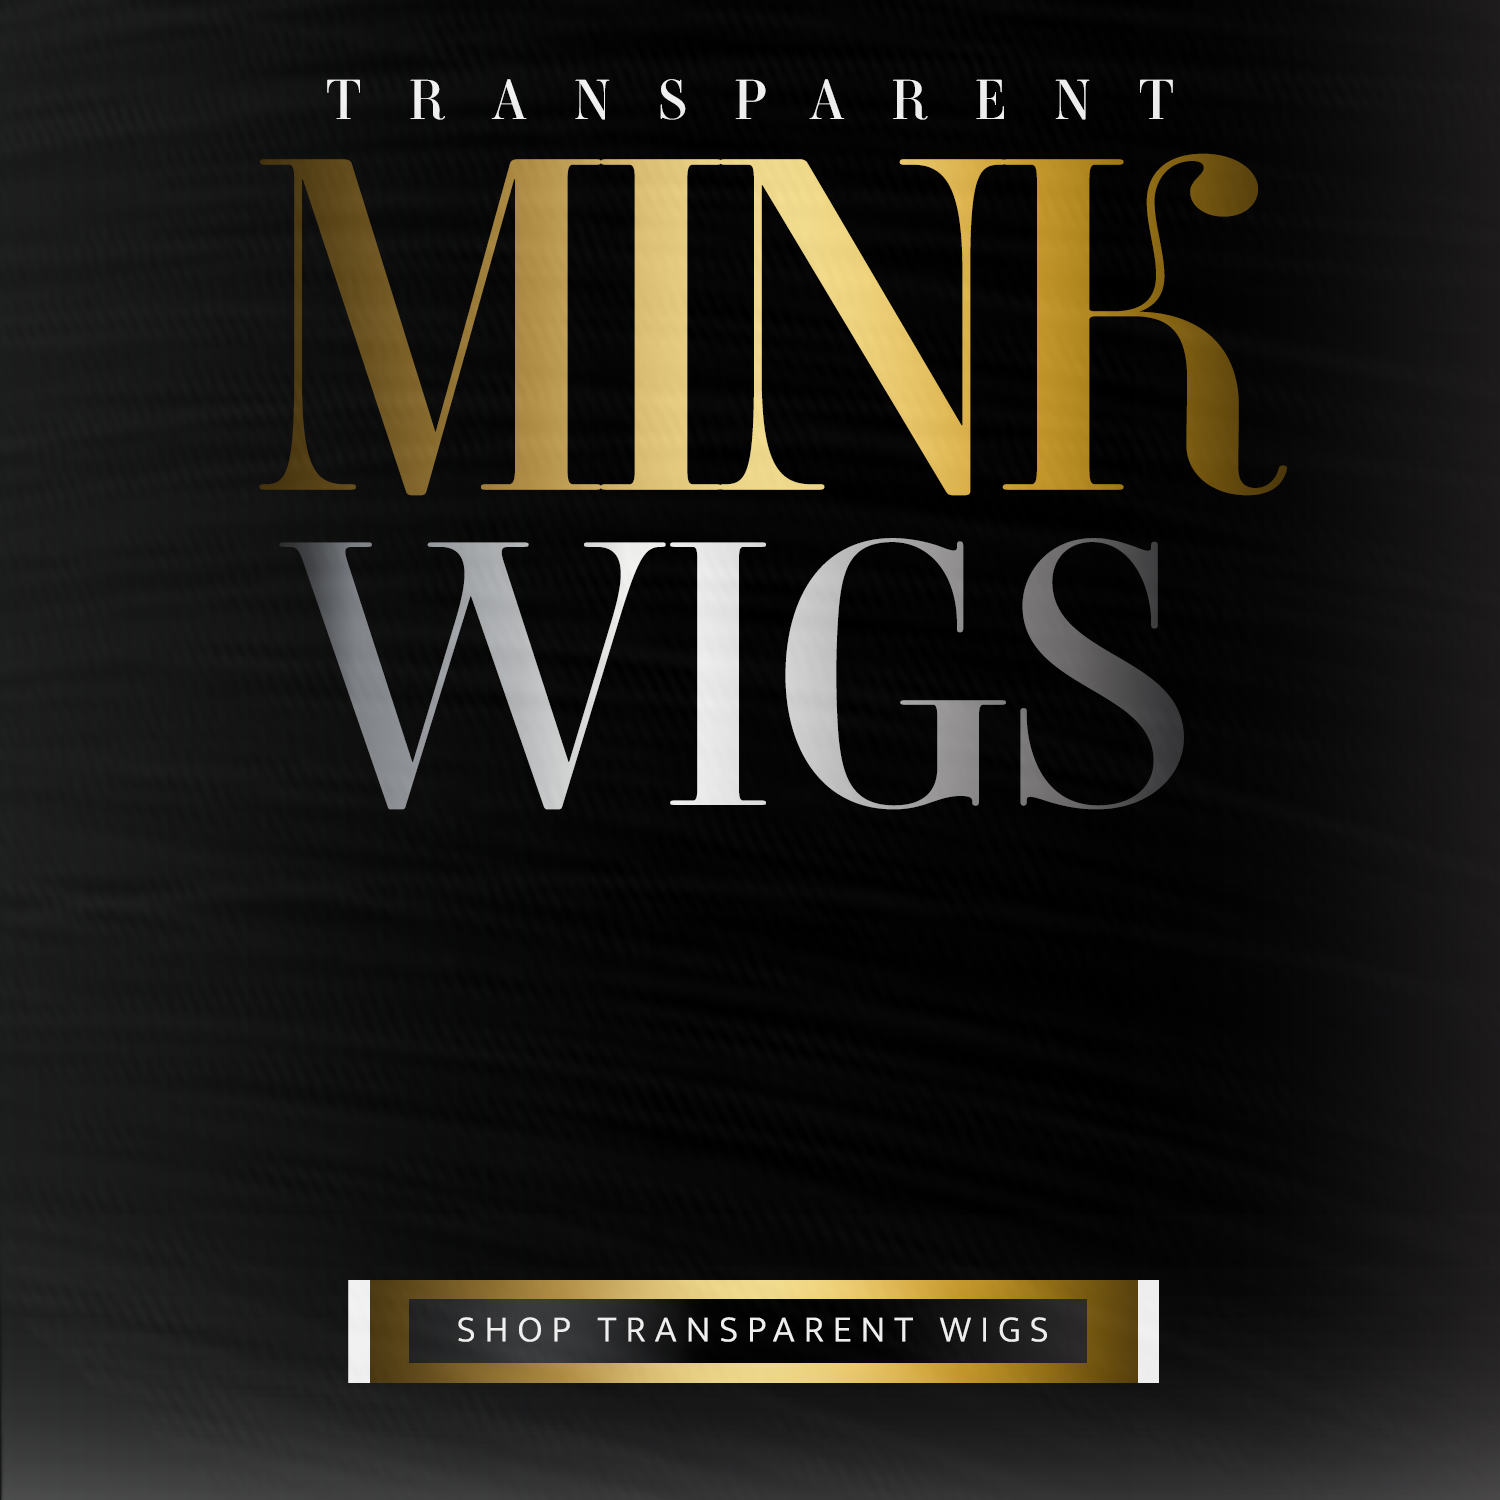 Mink Transparent Wigs